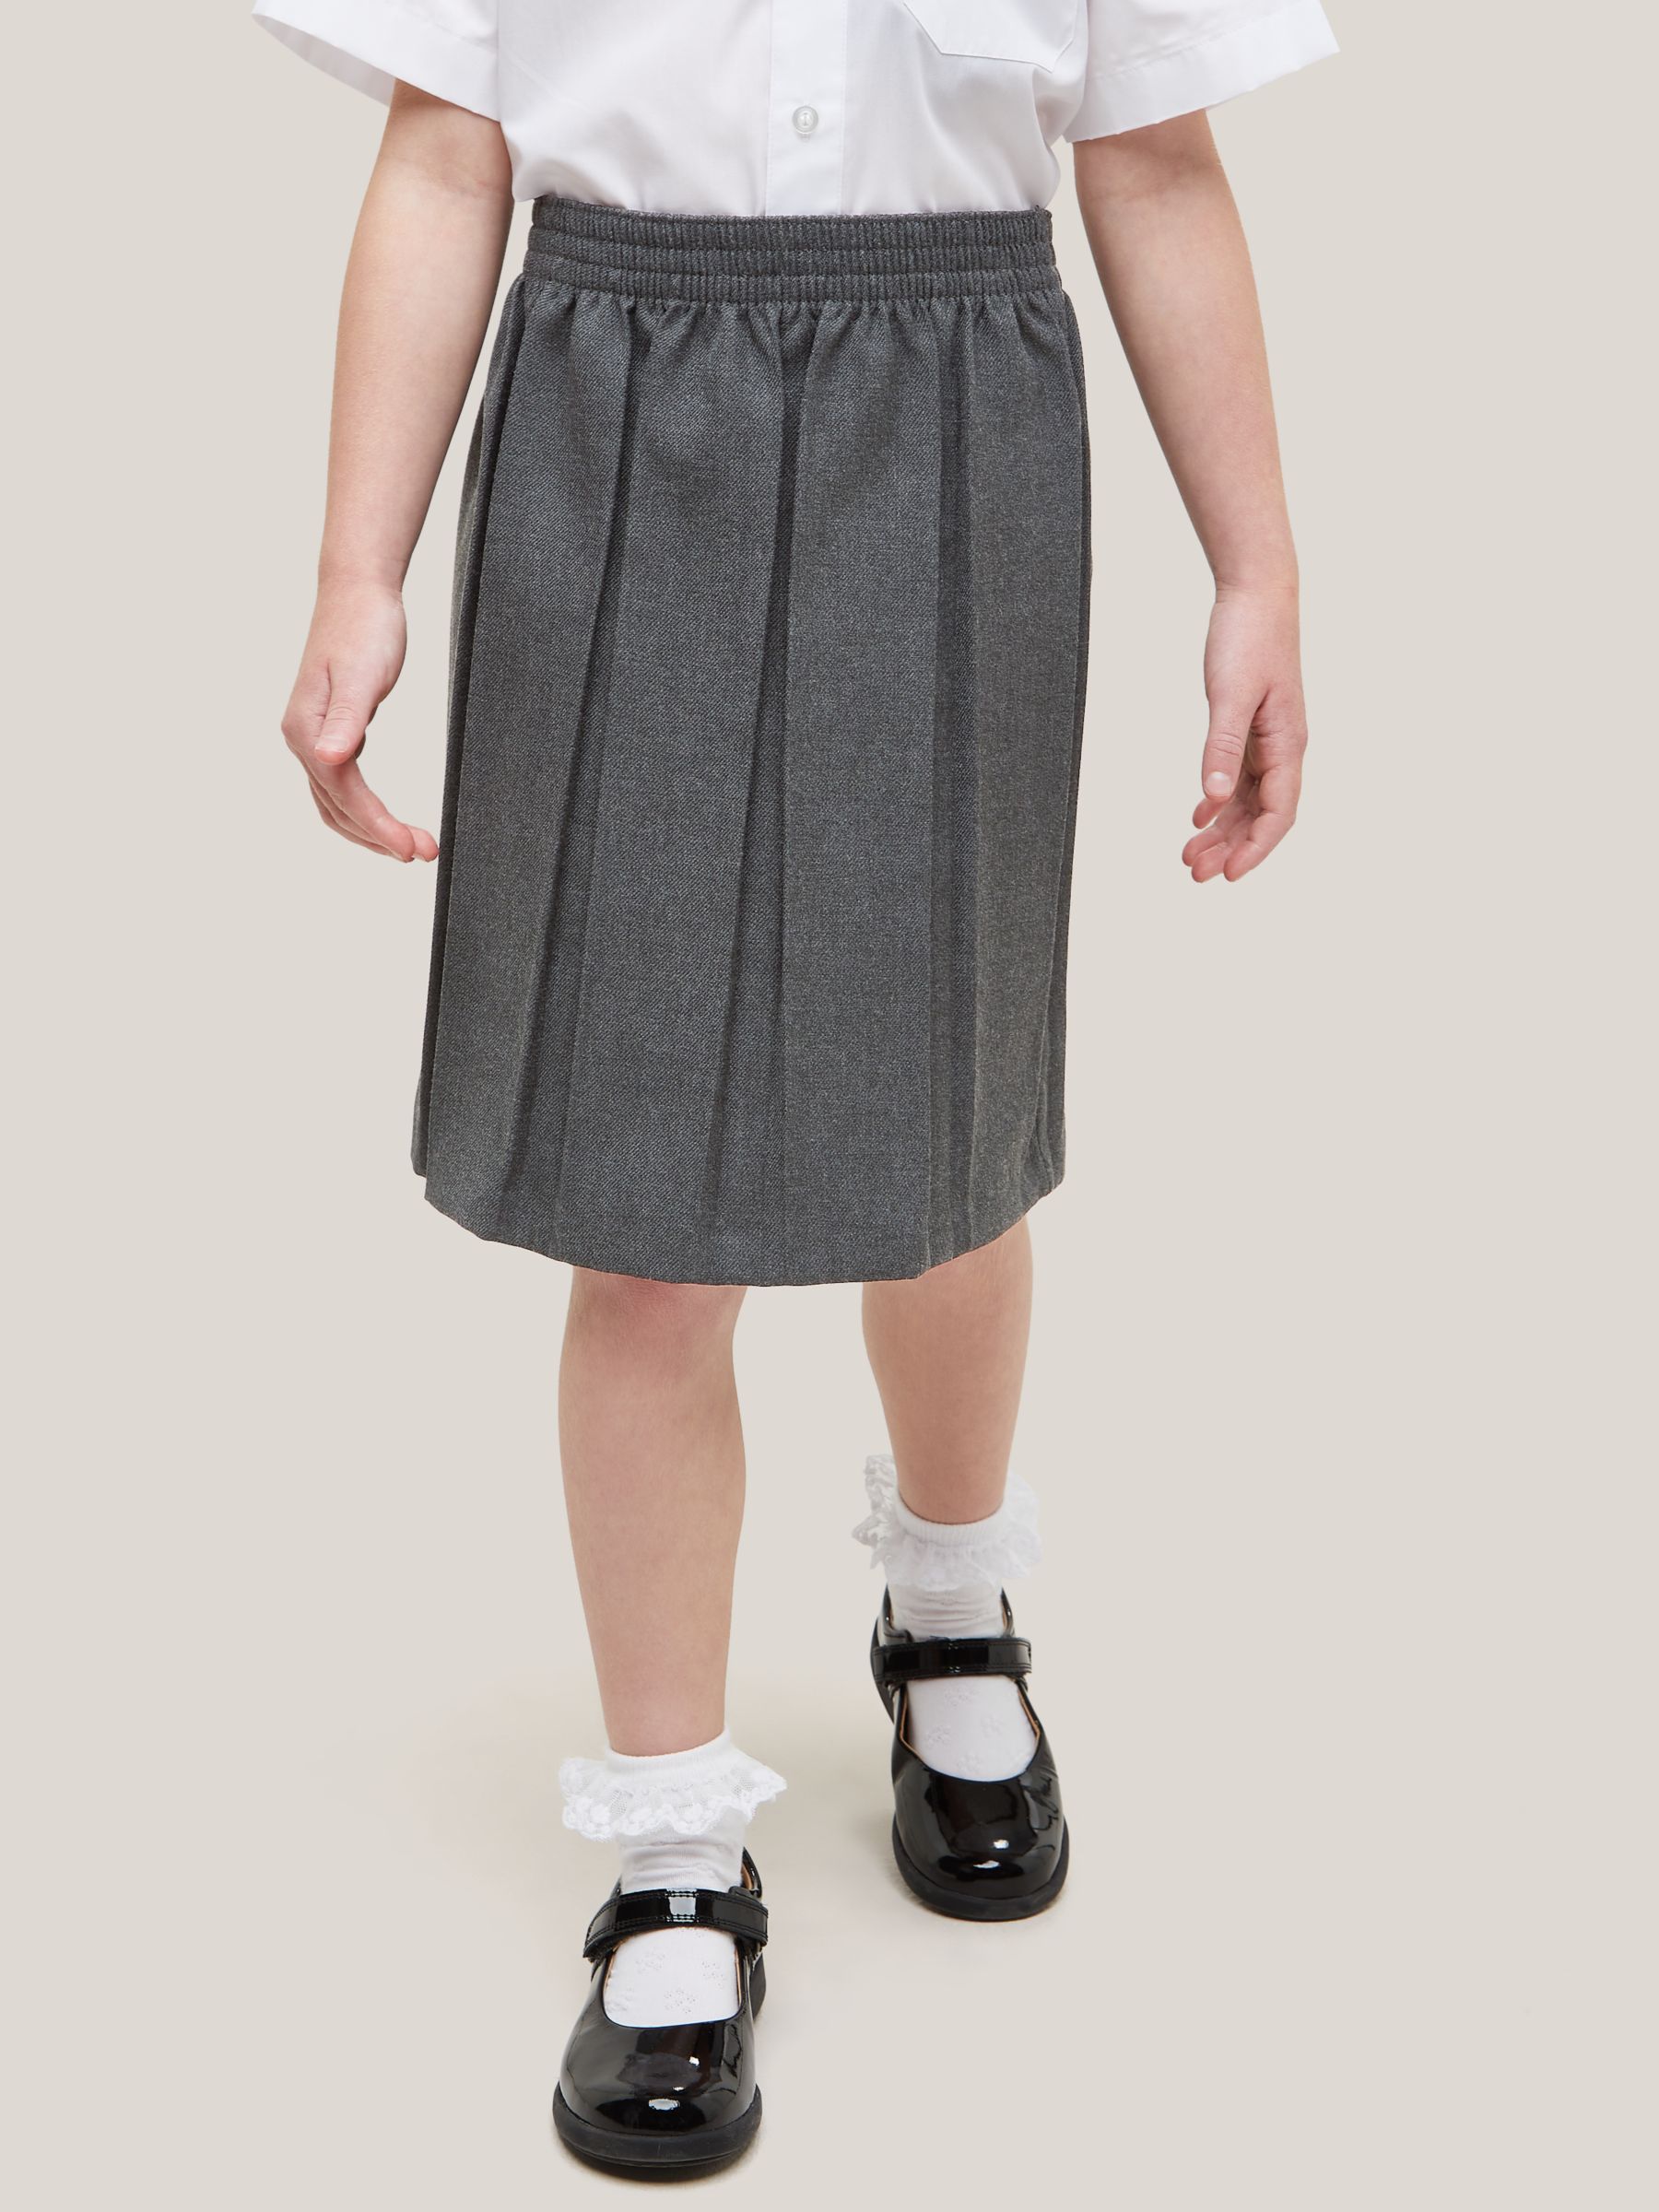 John Lewis & Partners Girls' Easy Care Pleated School Skirt